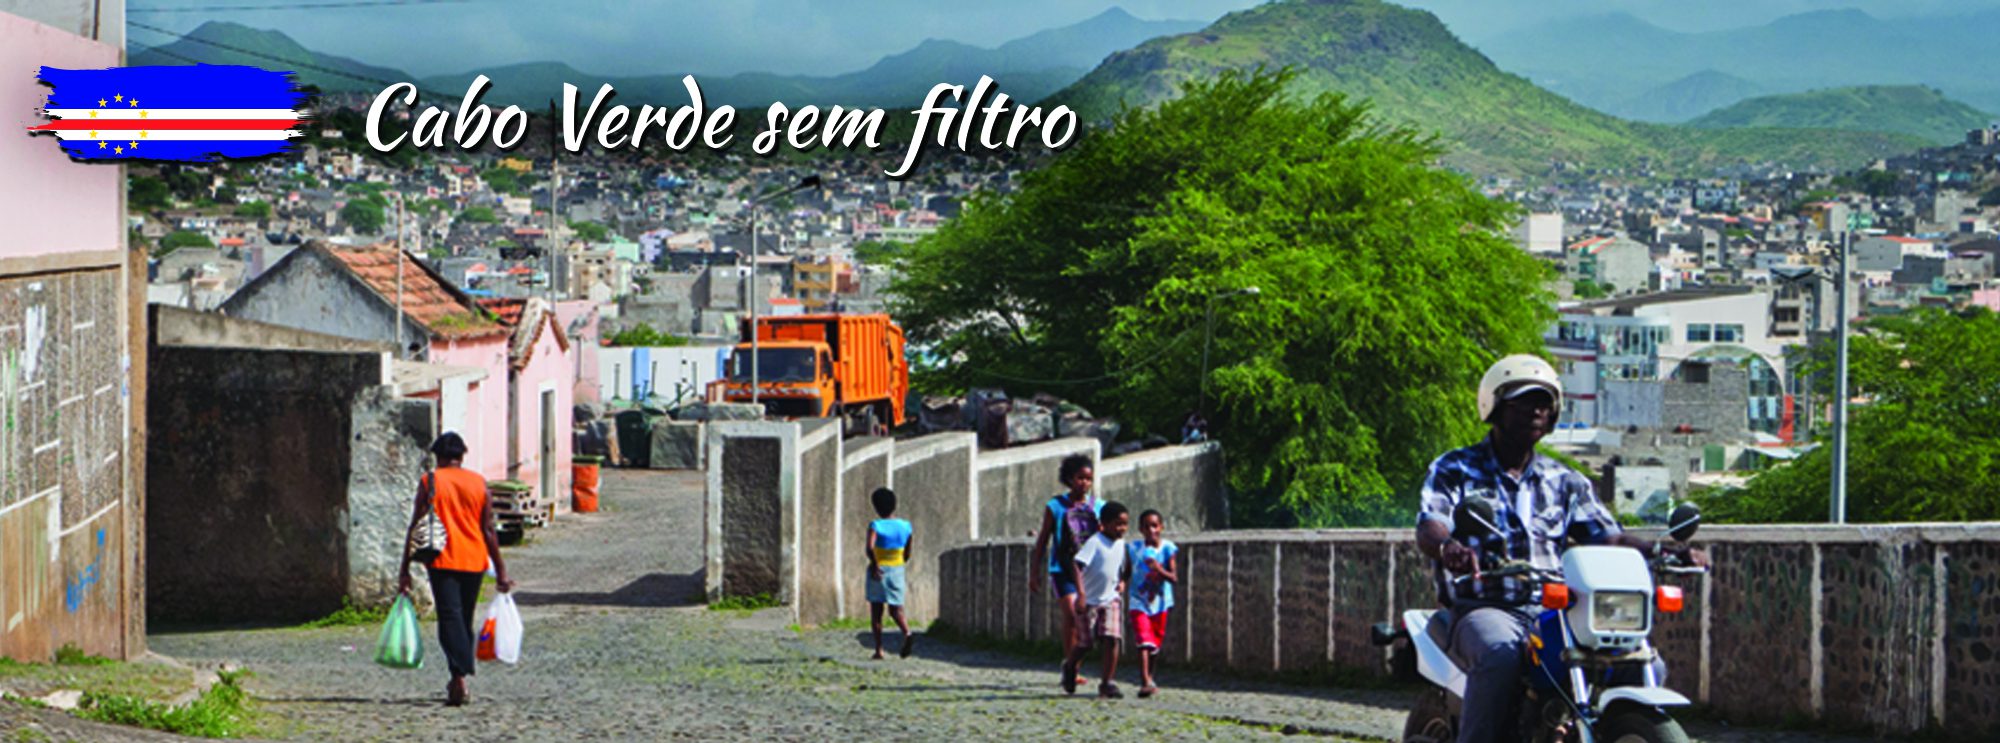 Cabo Verde sem filtro